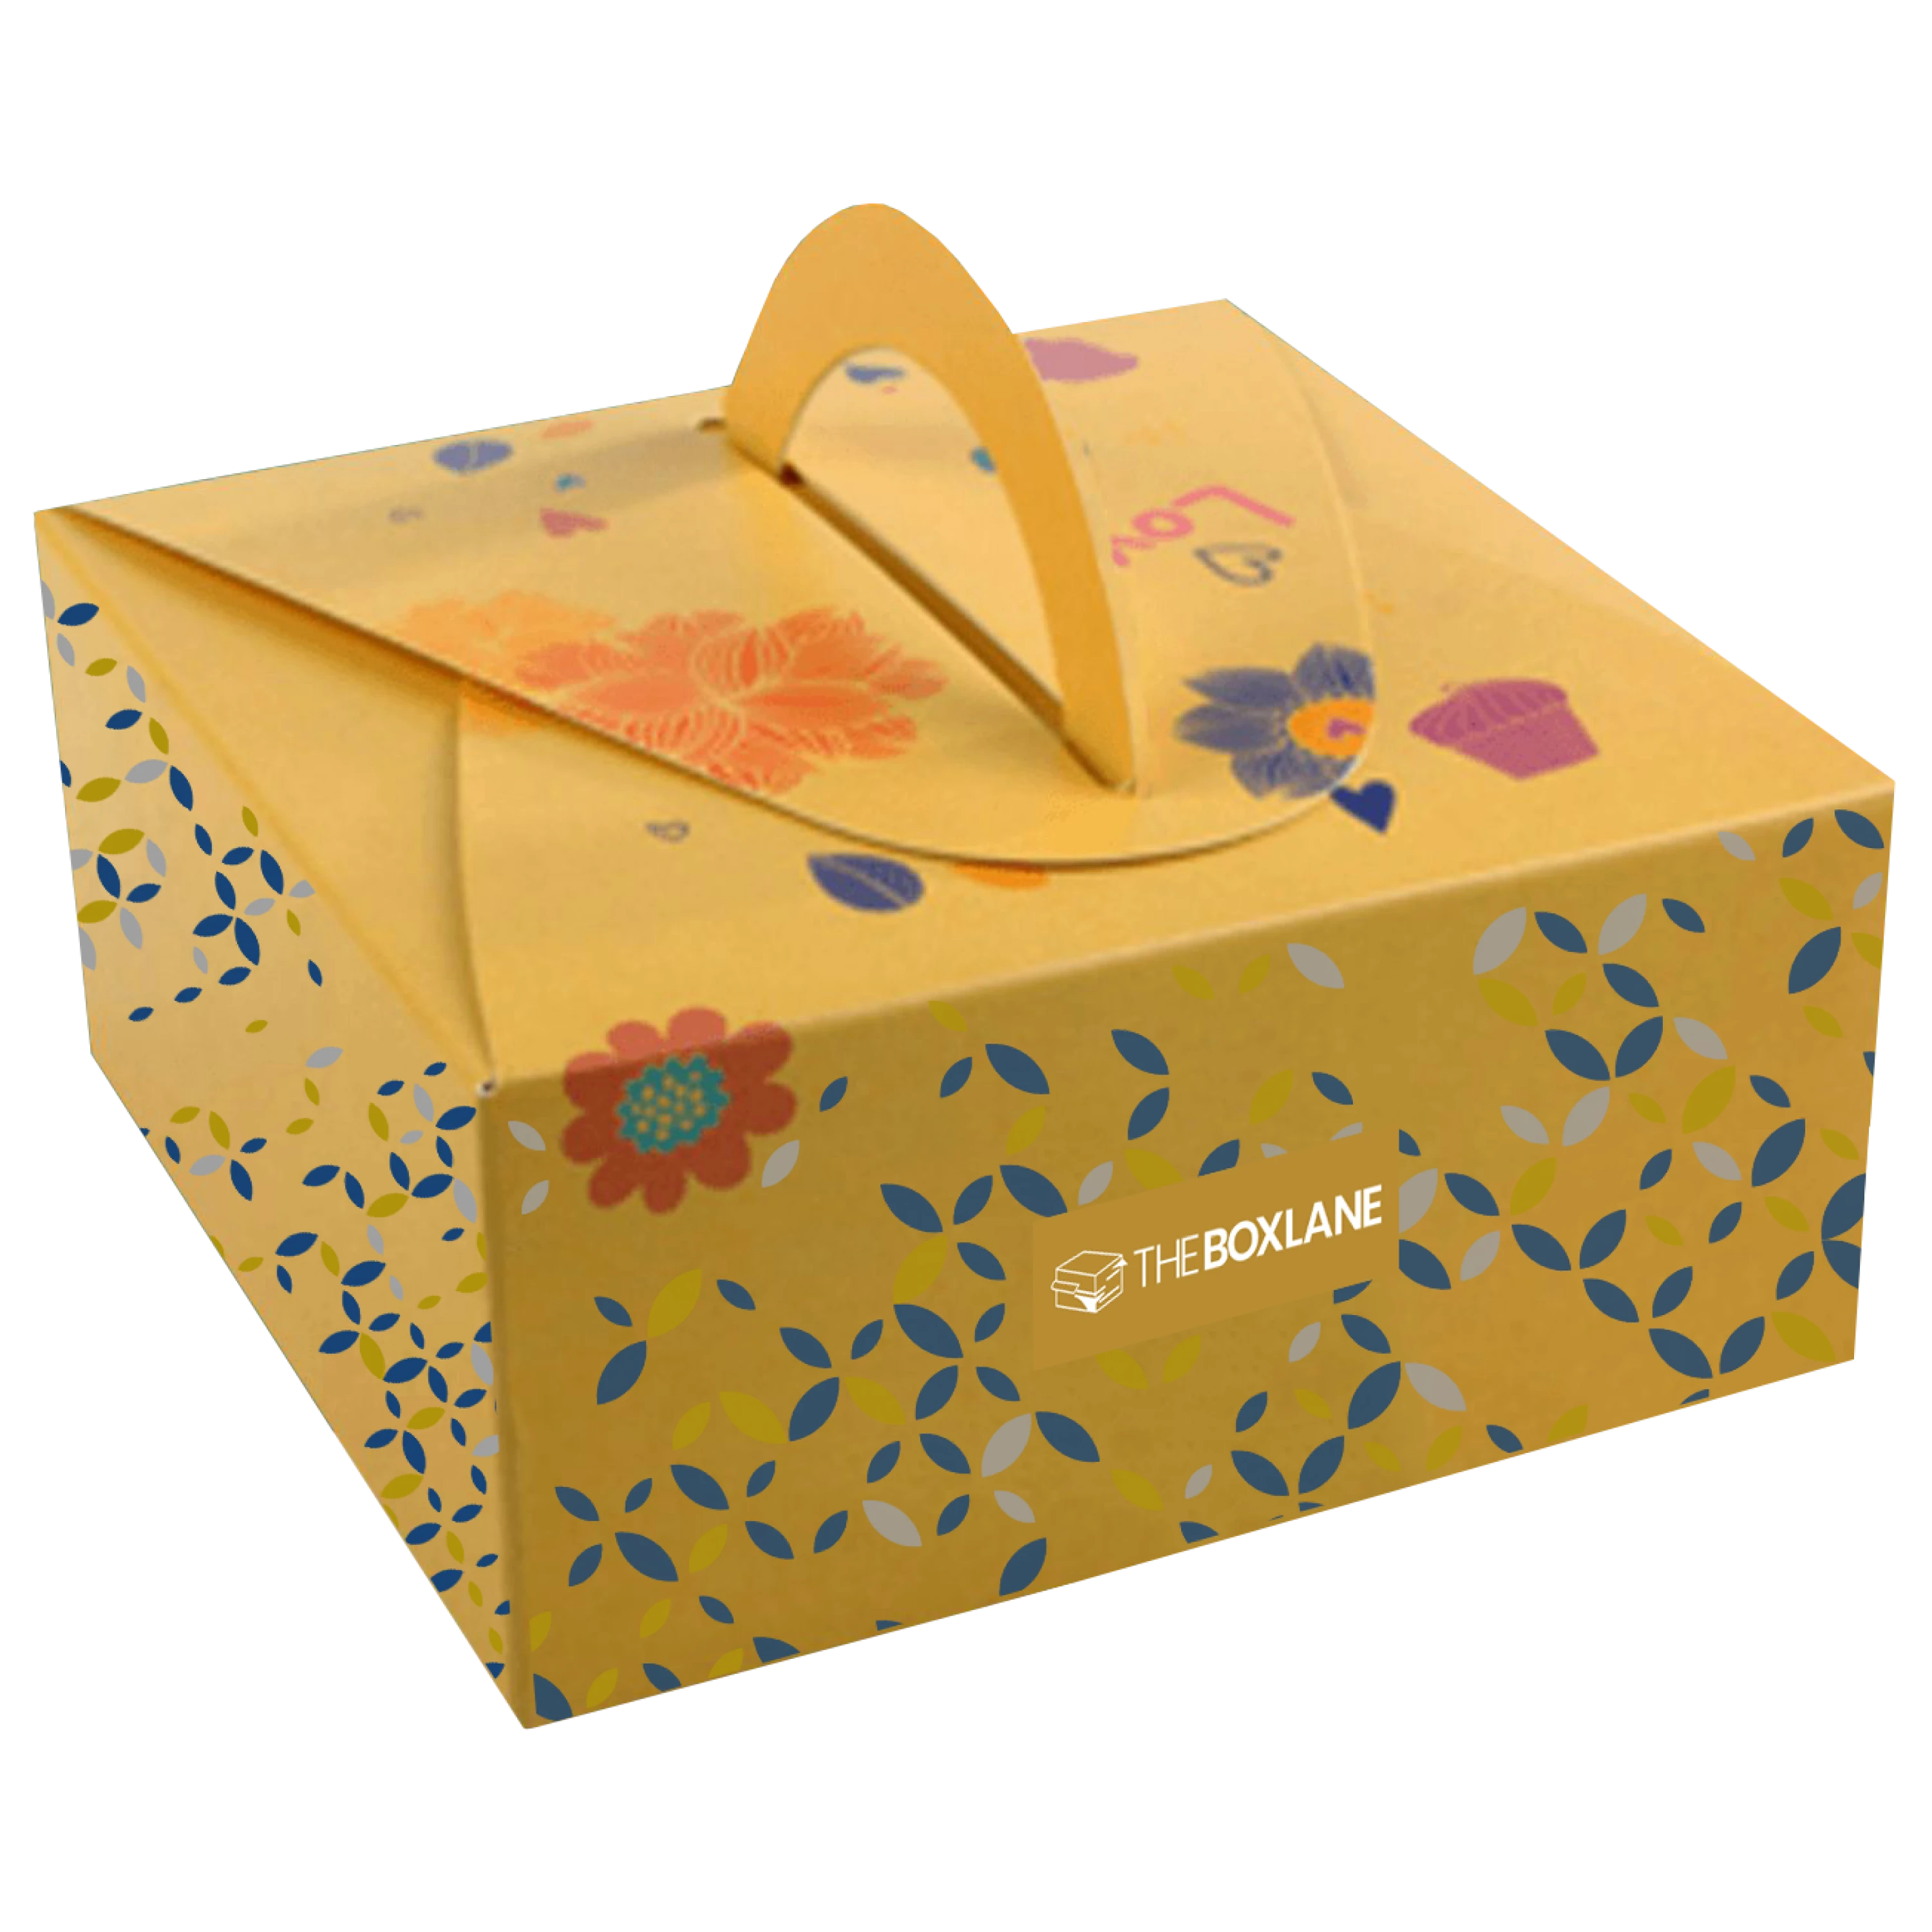 Carousel Bakery Gift Boxes packaging image 4 | The Box Lane